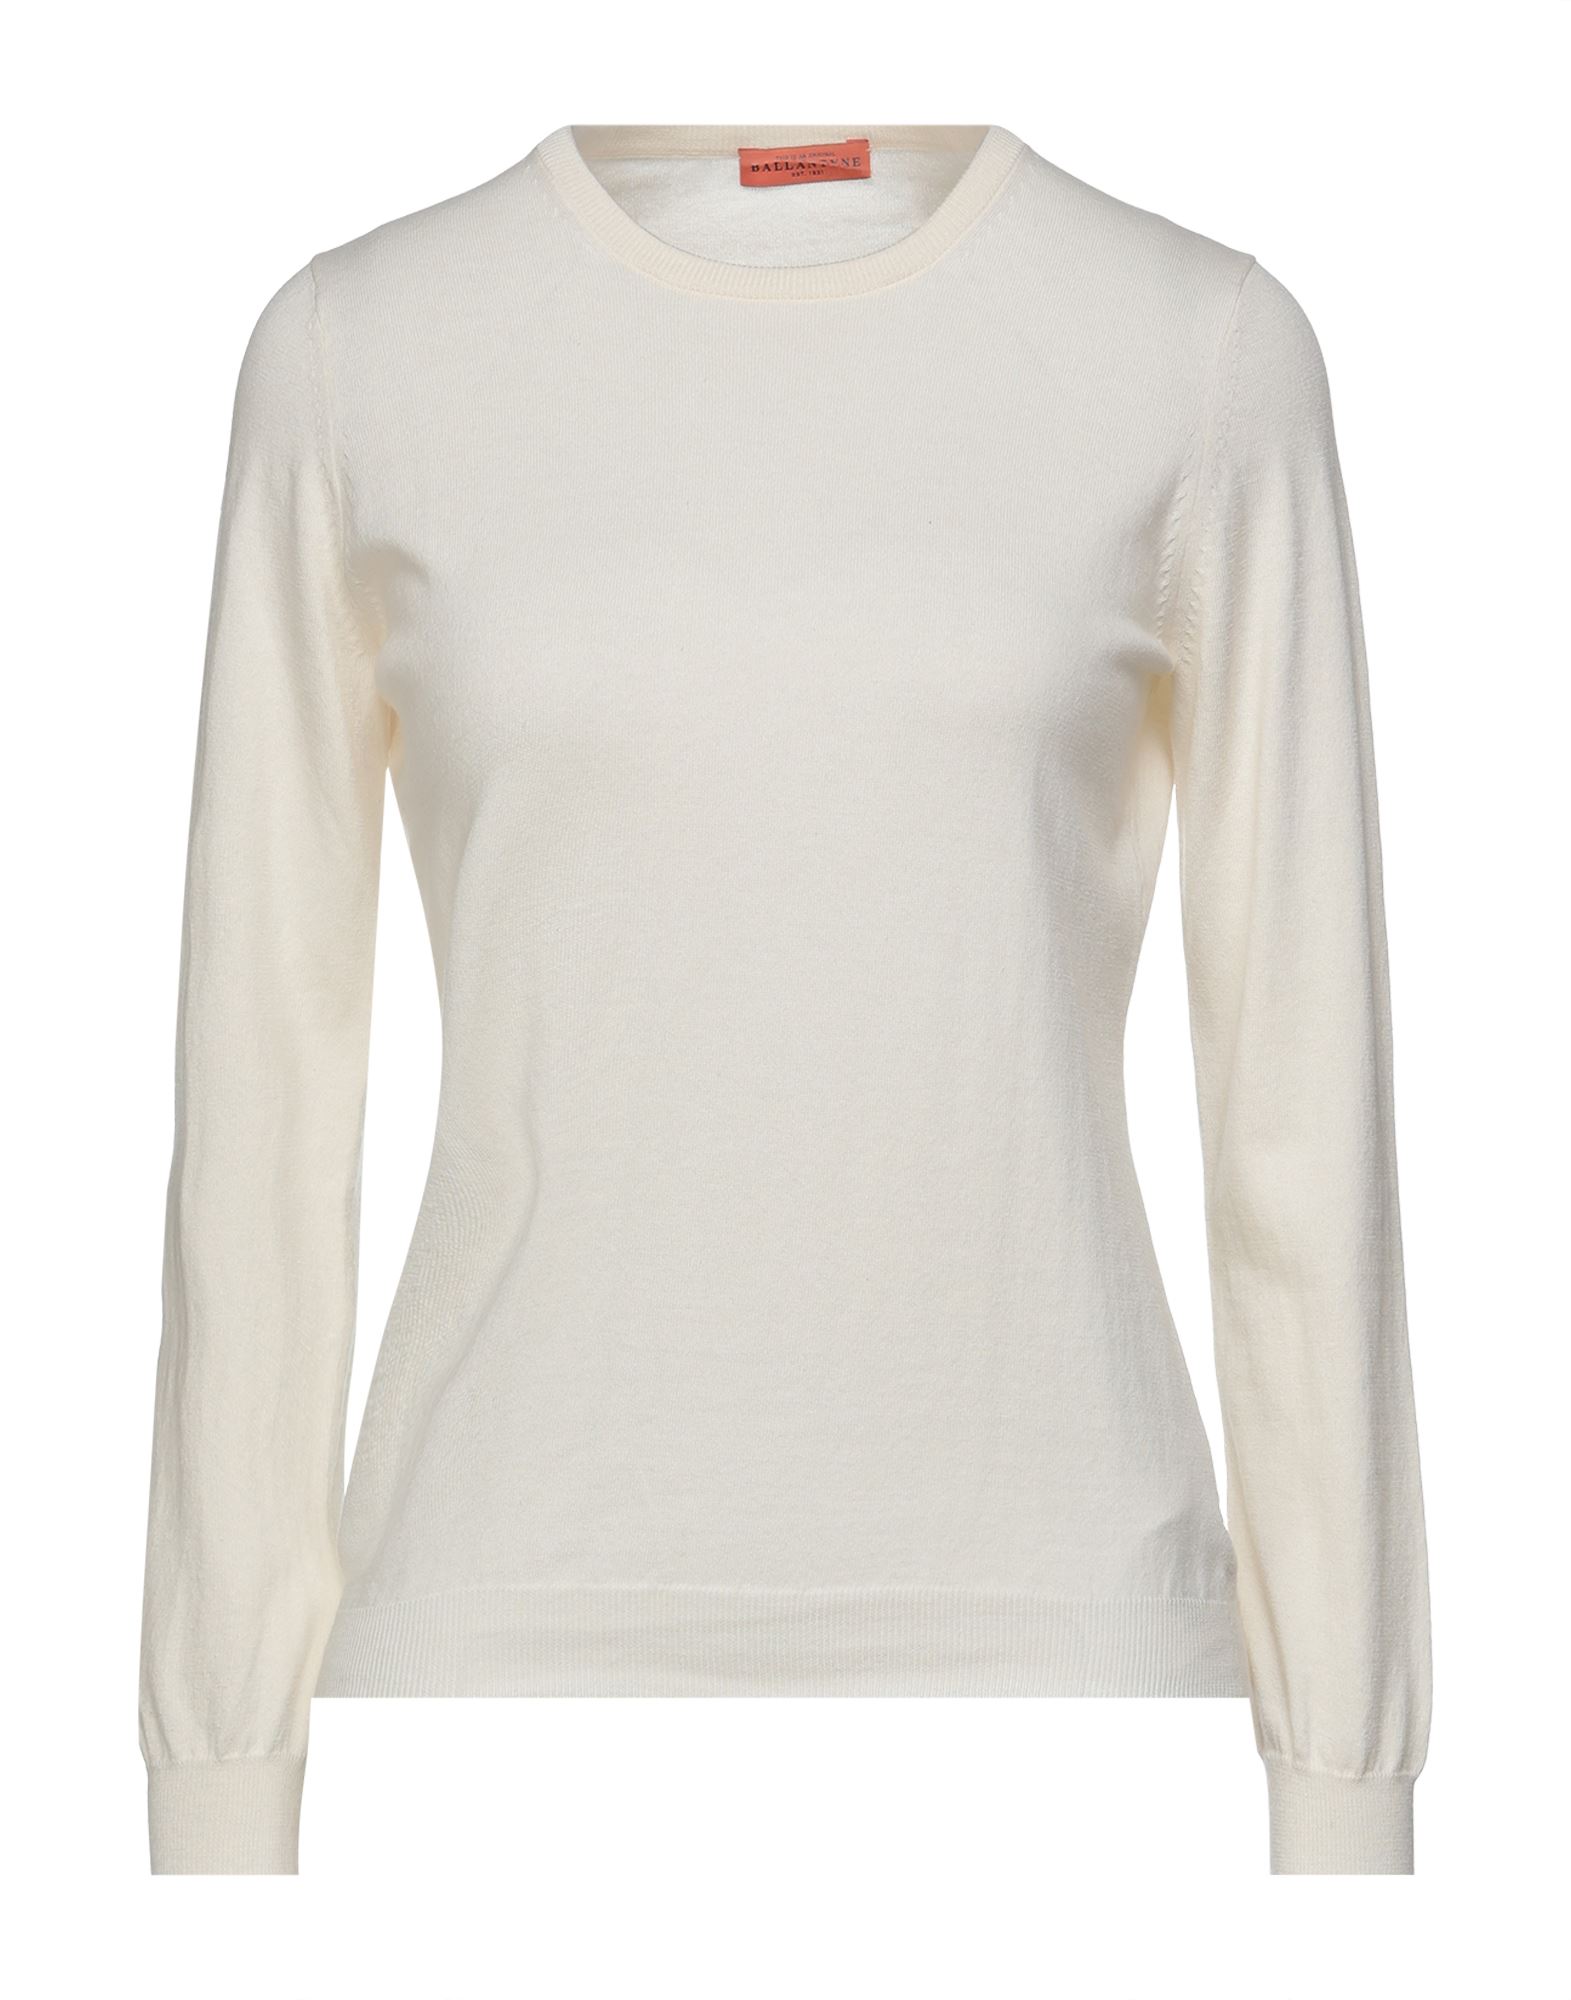 Ballantyne Sweaters In White